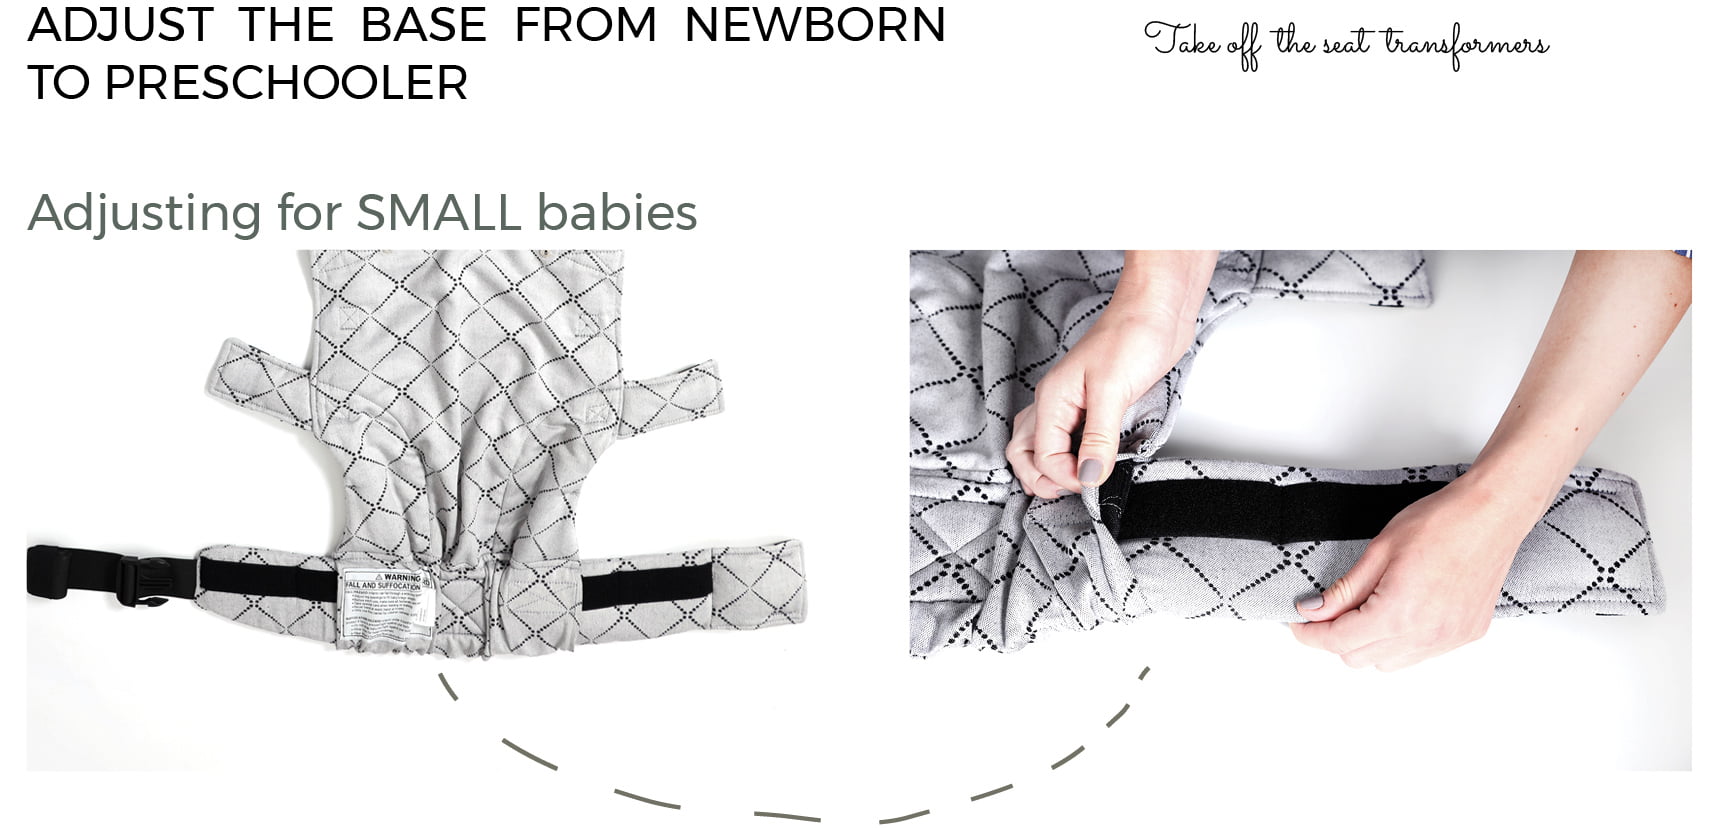 Adjusting The ONE newborn and preschoolers